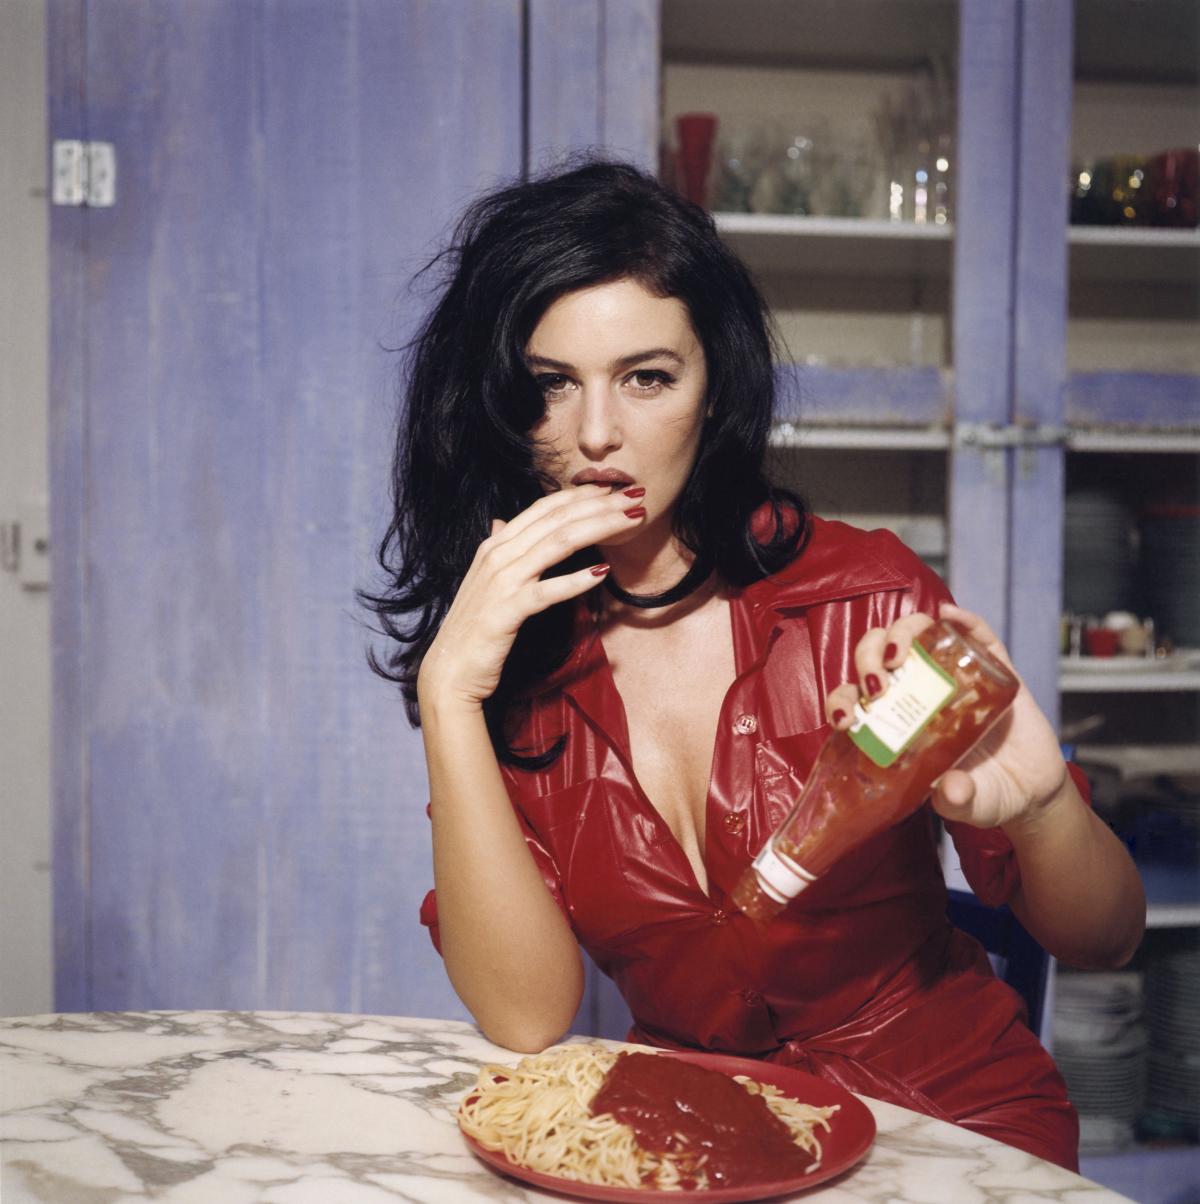 Breakfast with Monica Bellucci. November 1995, Paris. Copyright Bettina Rheims